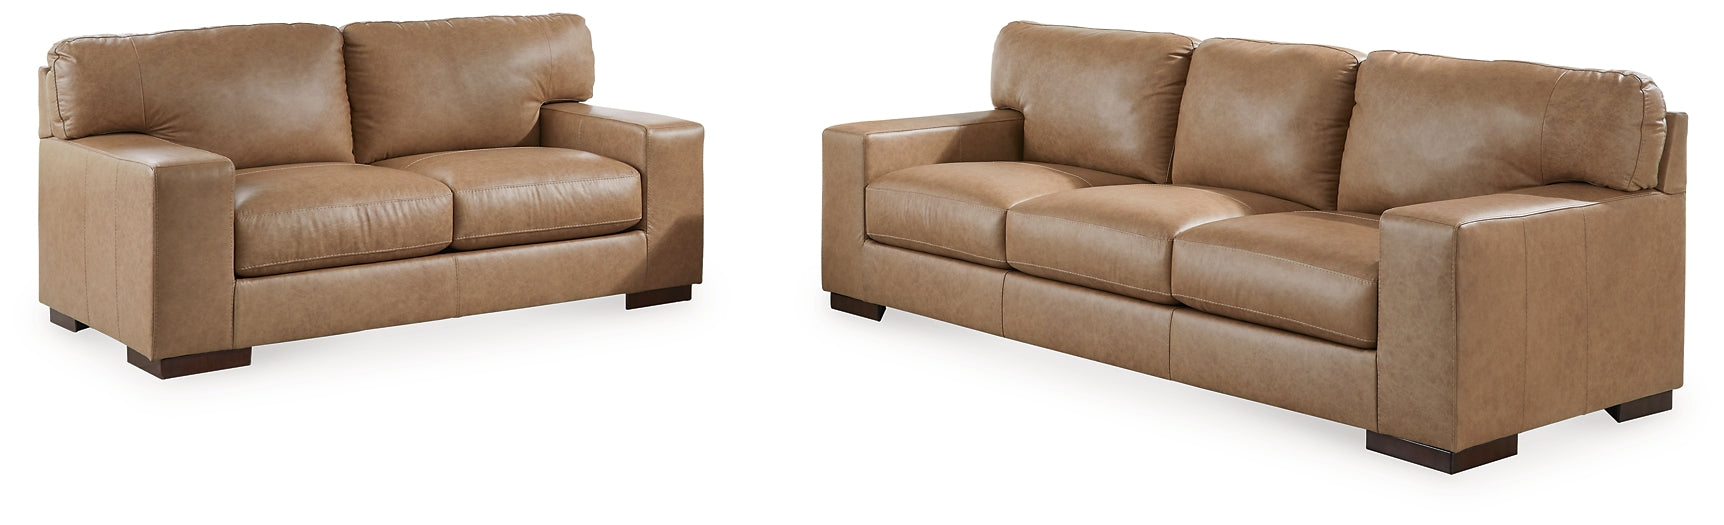 Lombardia Sofa and Loveseat at Cloud 9 Mattress & Furniture furniture, home furnishing, home decor